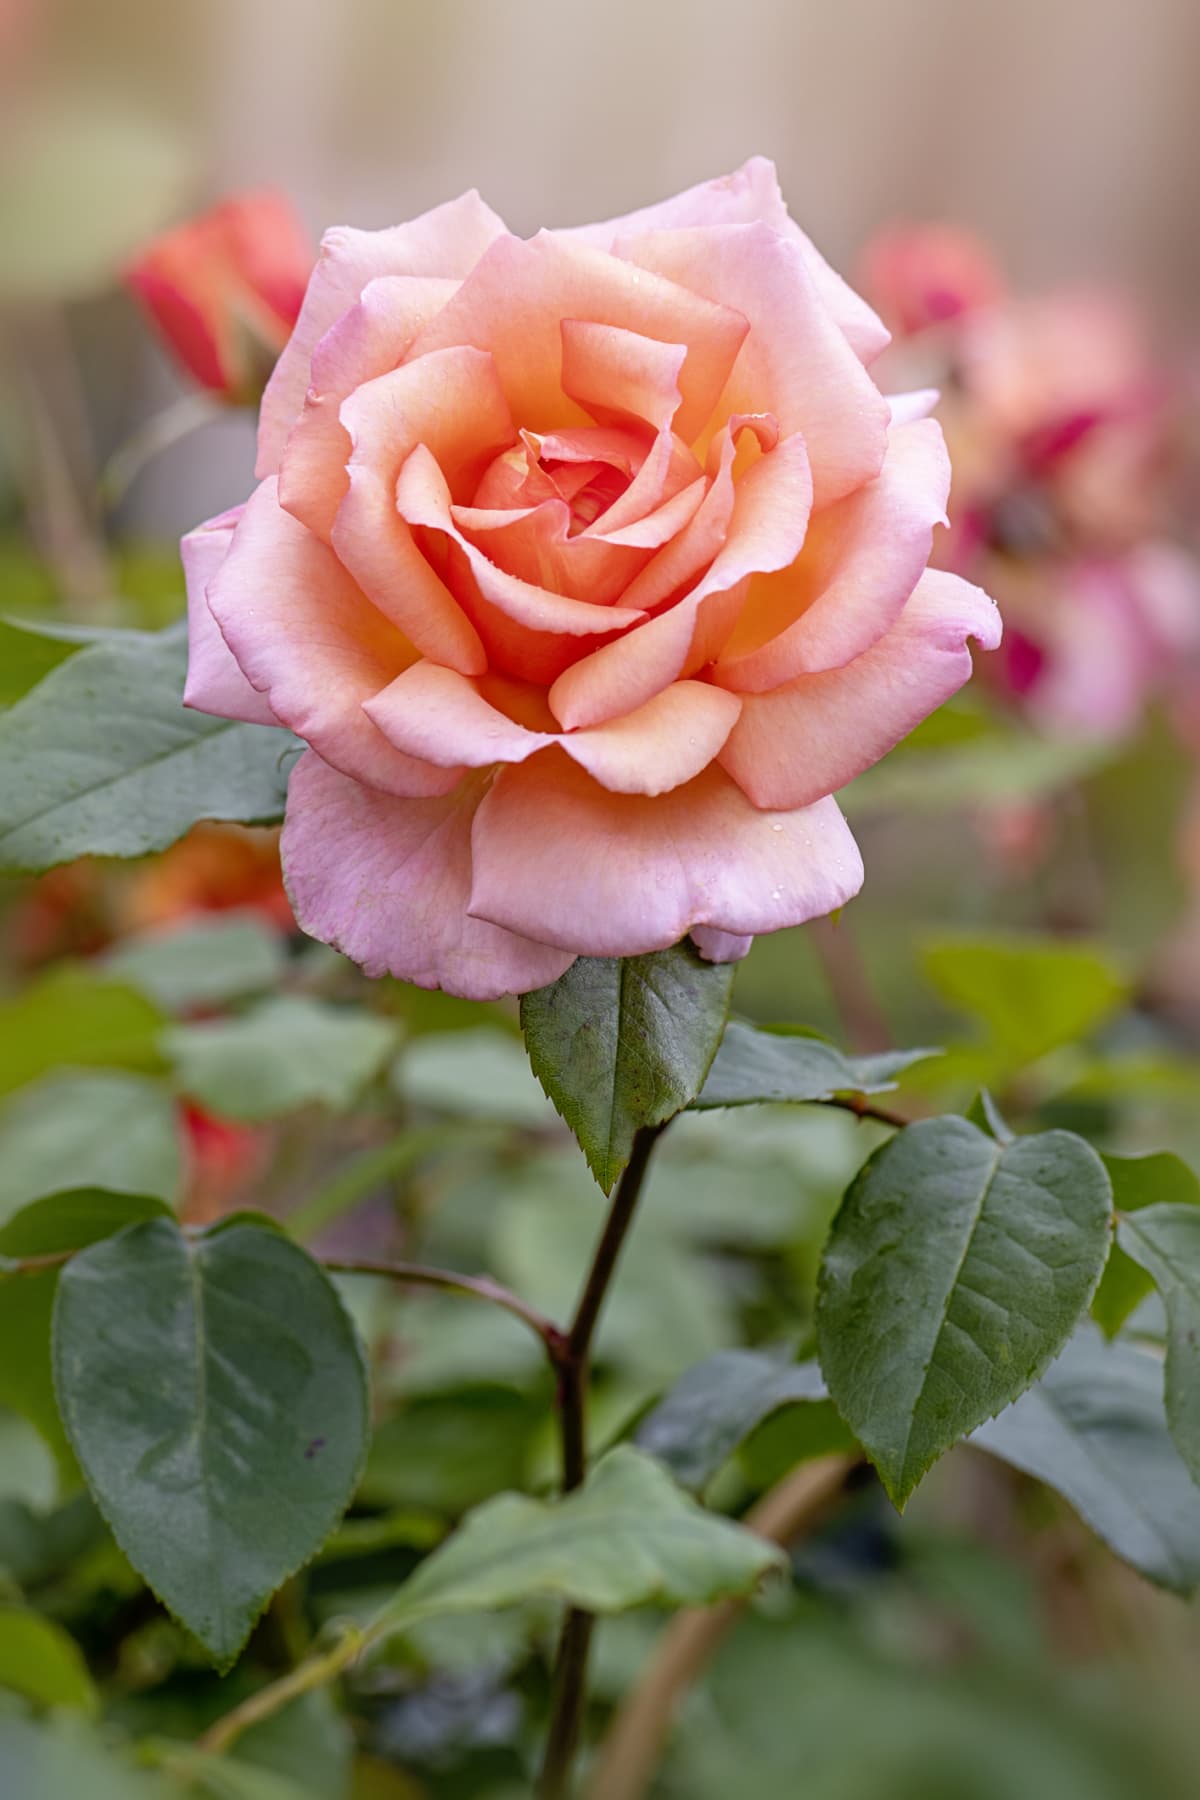 A pink rose in a garden.